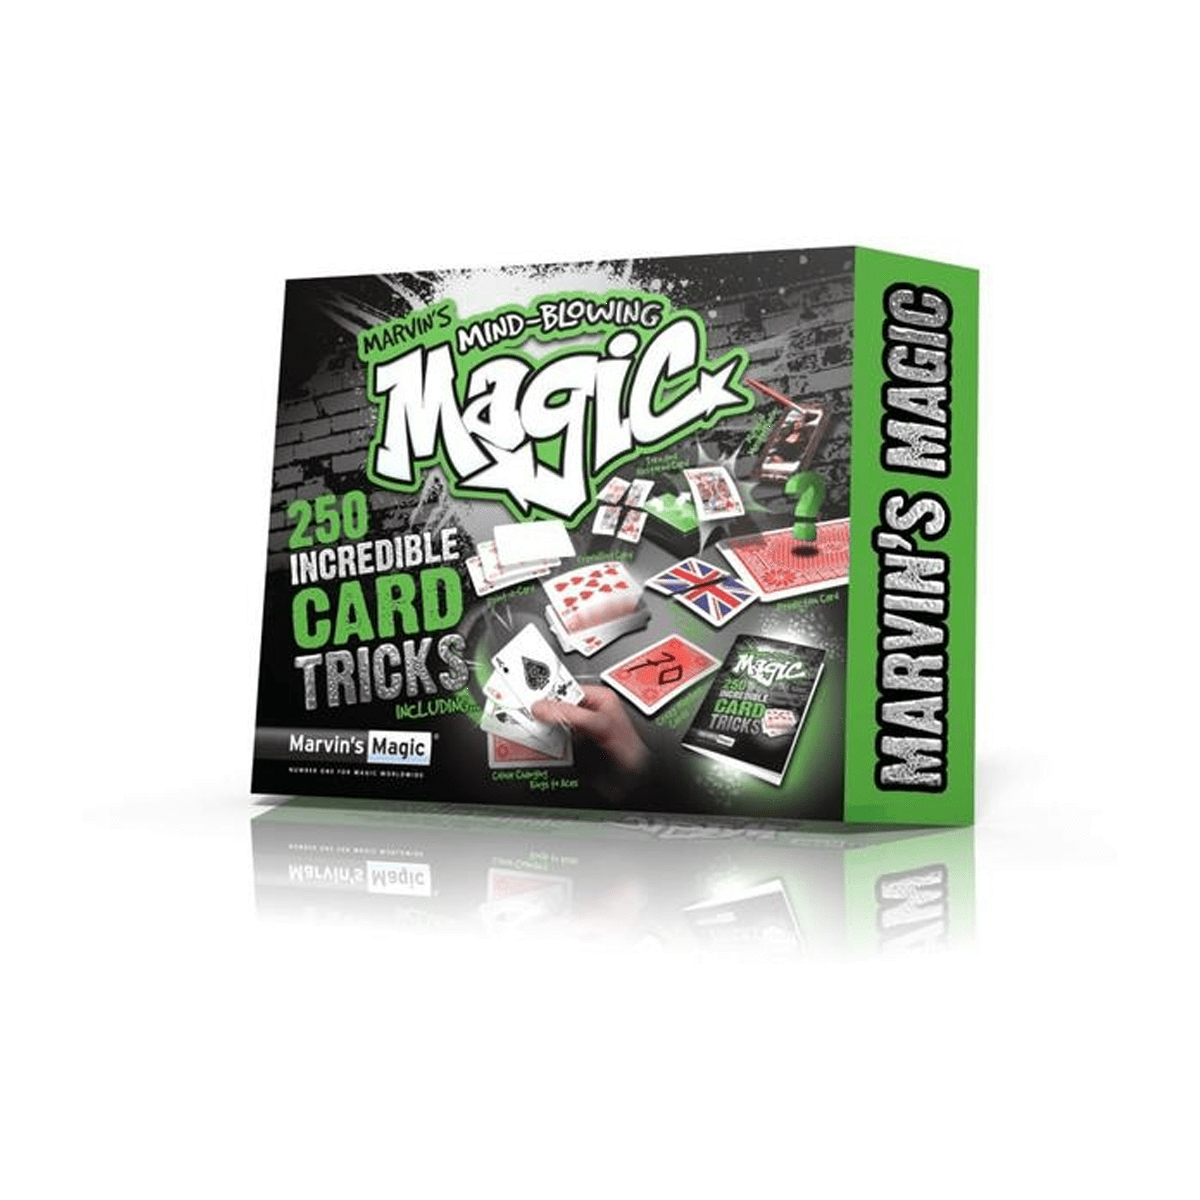 Marvin’s Magic MMB 5730 Incredible Card Tricks - Green